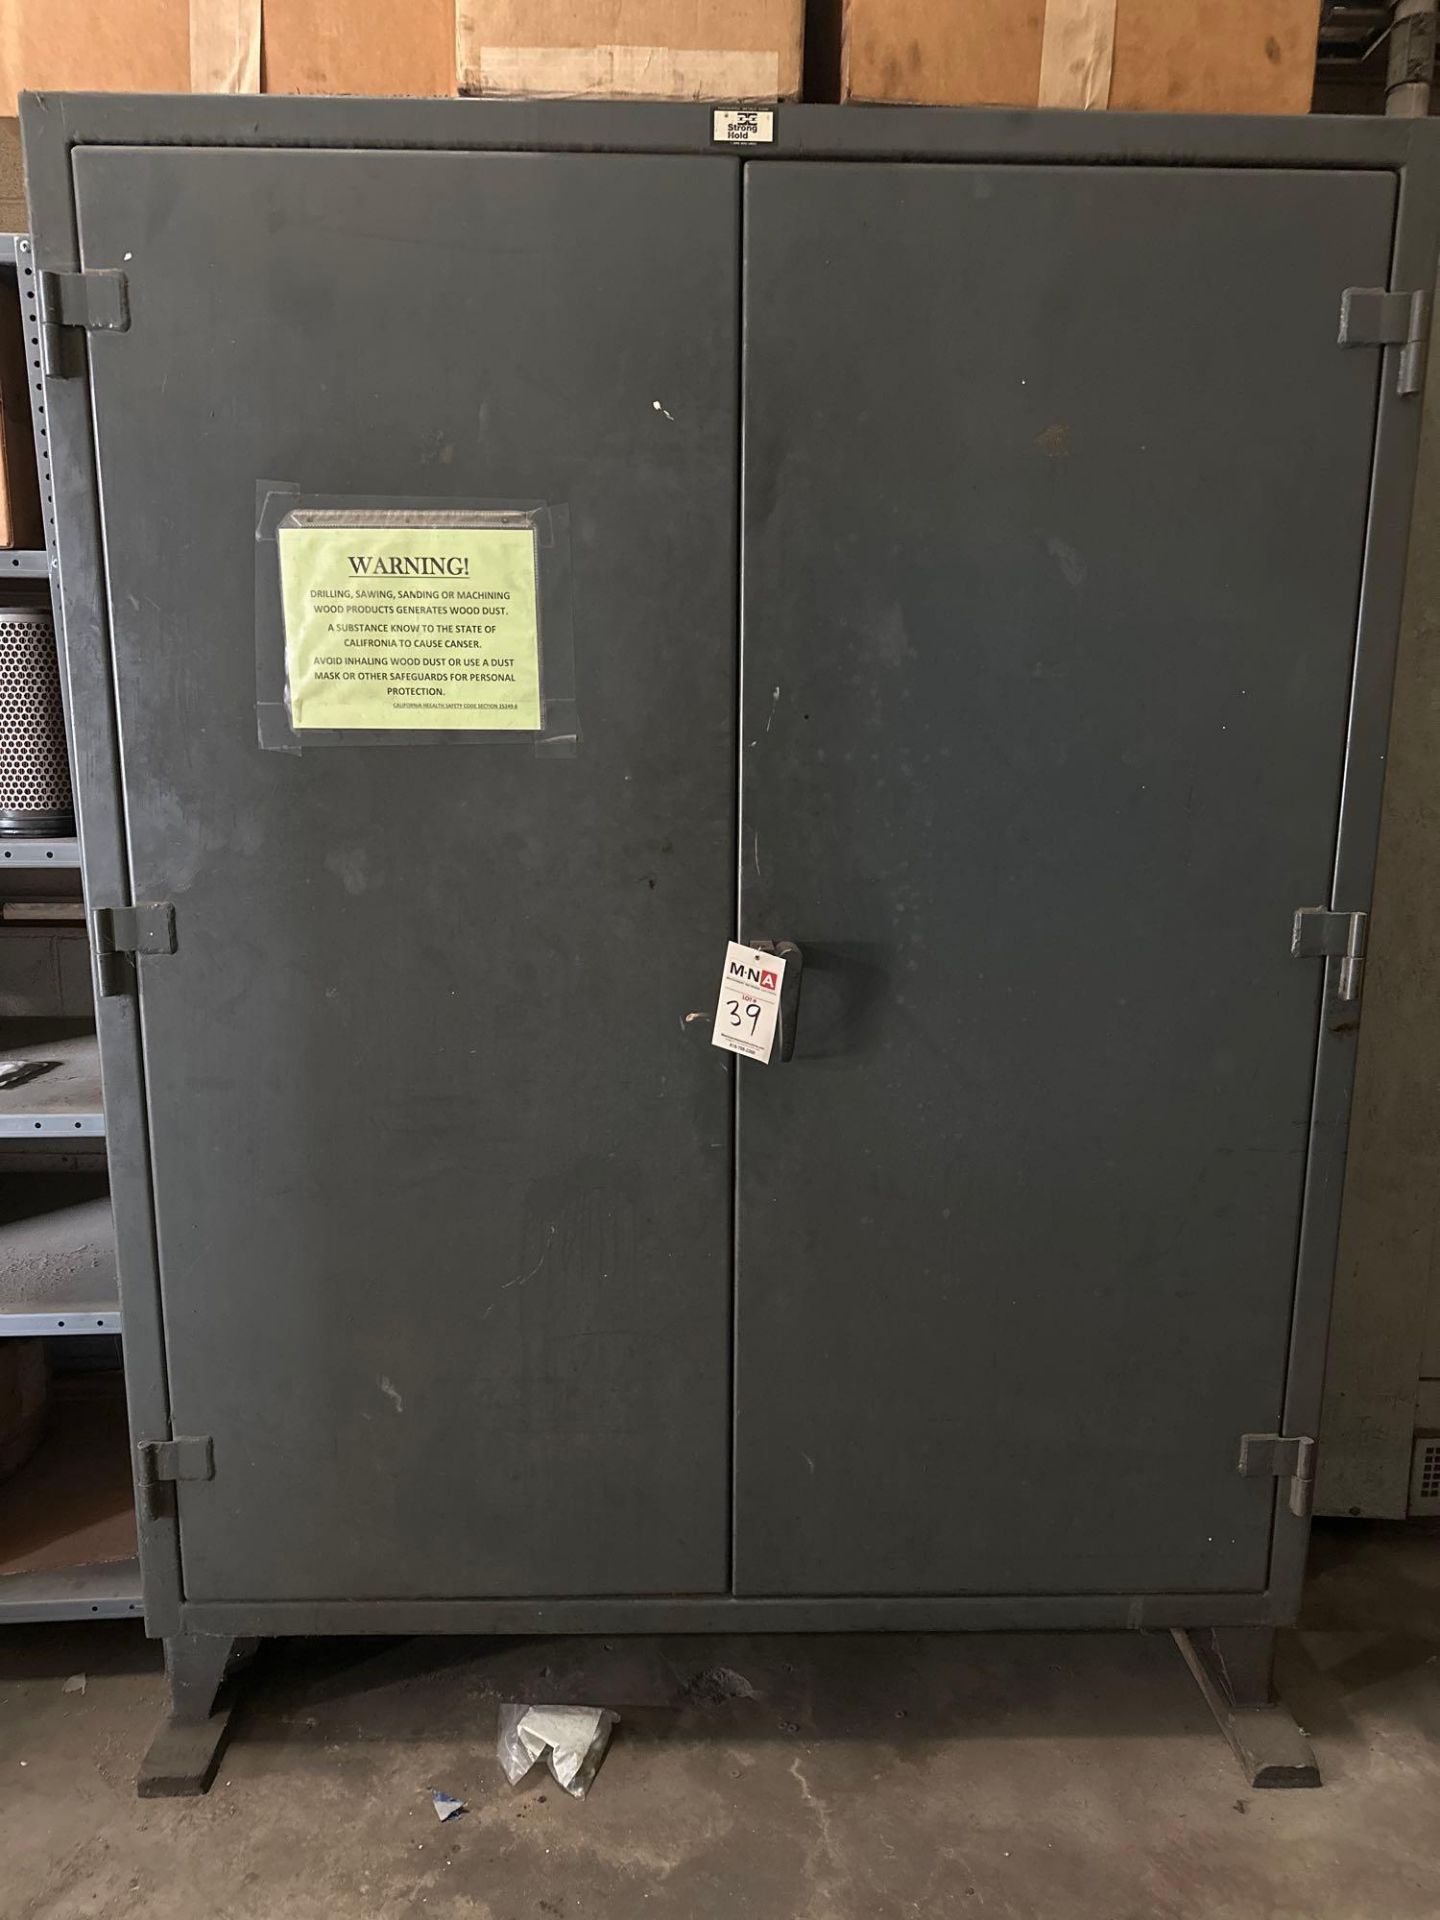 2 Door Steel Cabinet w/ Screws, Bolts, Miscellaneous Hardware & Organizers